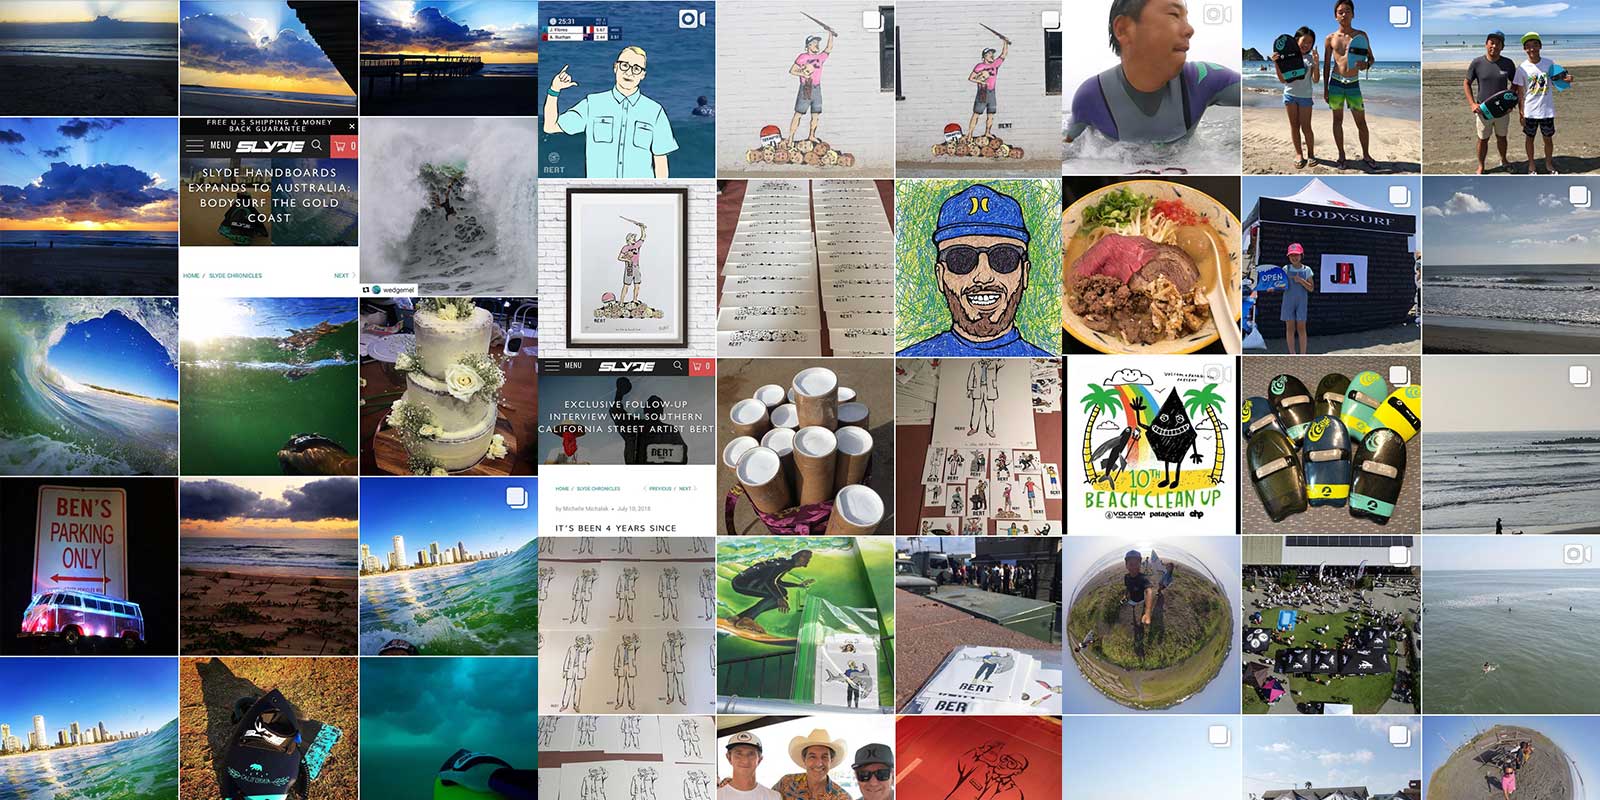 7 Best Bodysurfing Accounts to follow on Instagram August 2018